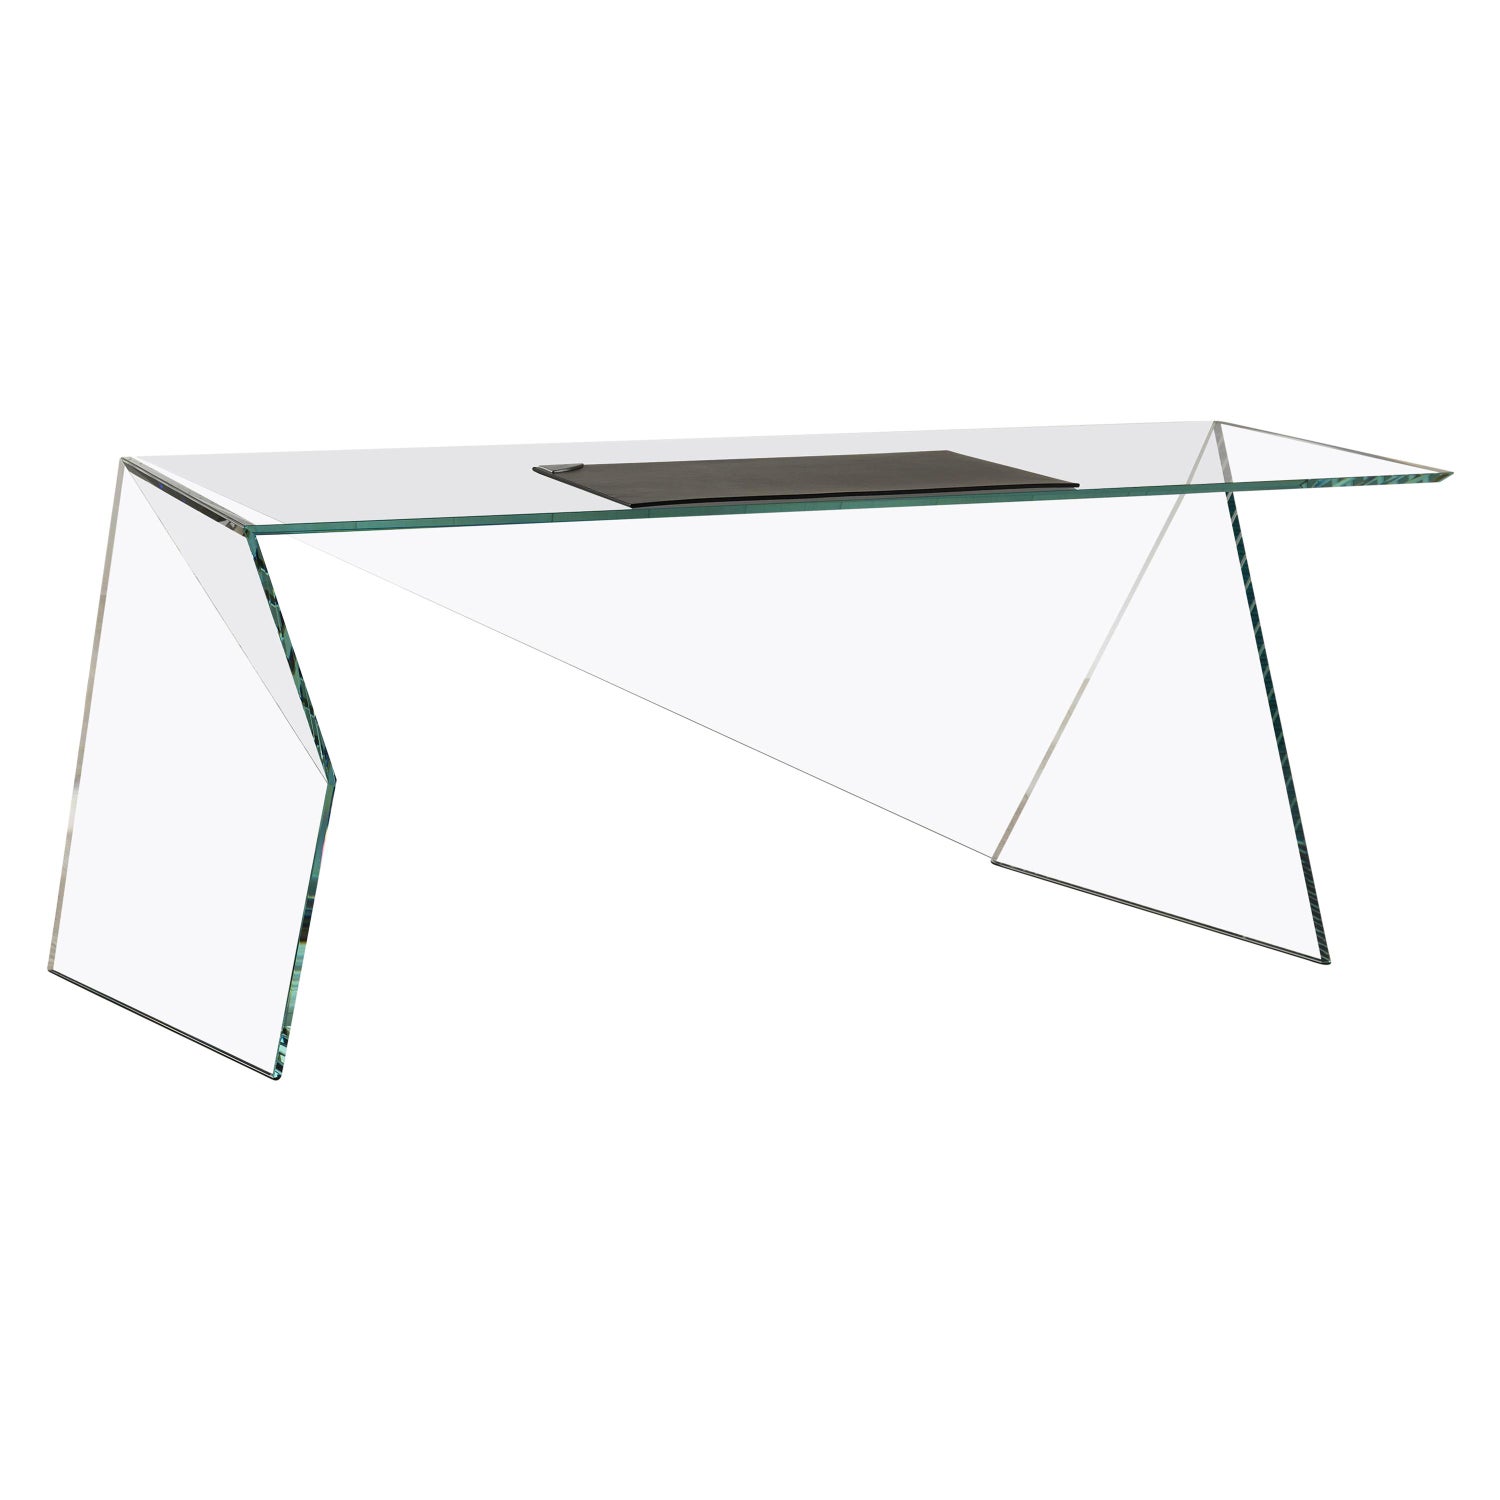 https://a.1stdibscdn.com/executive-desk-table-modern-glass-crystal-limited-edition-design-for-sale/1121189/f_195048621592412324986/19504862_master.jpg?width=1500